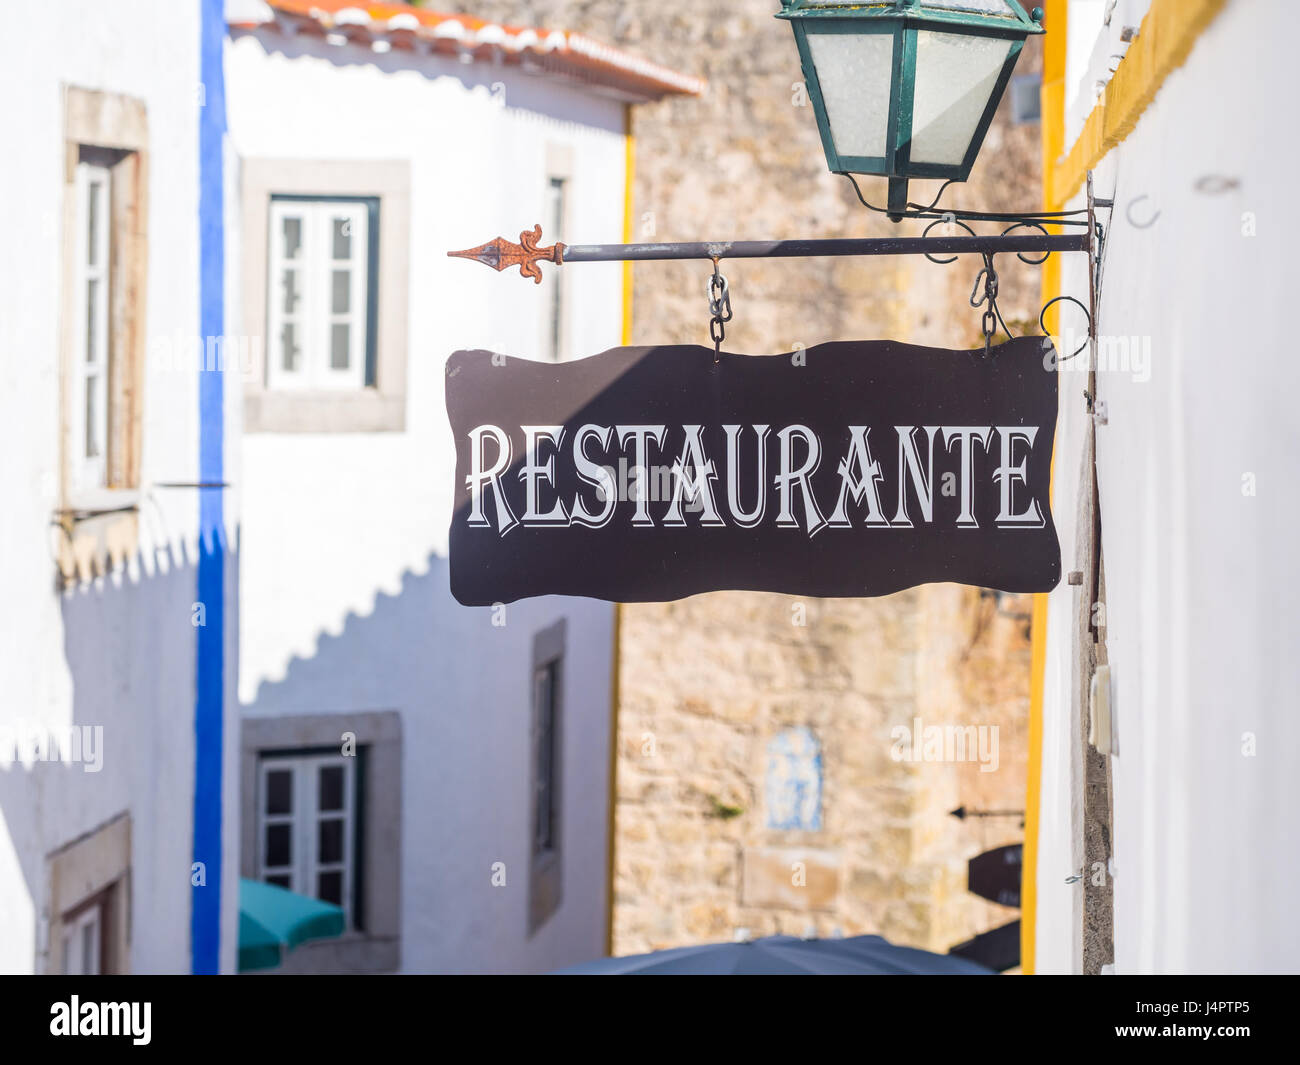 Sign reading 'Restuarante' in Obidos, Portugal. Stock Photo